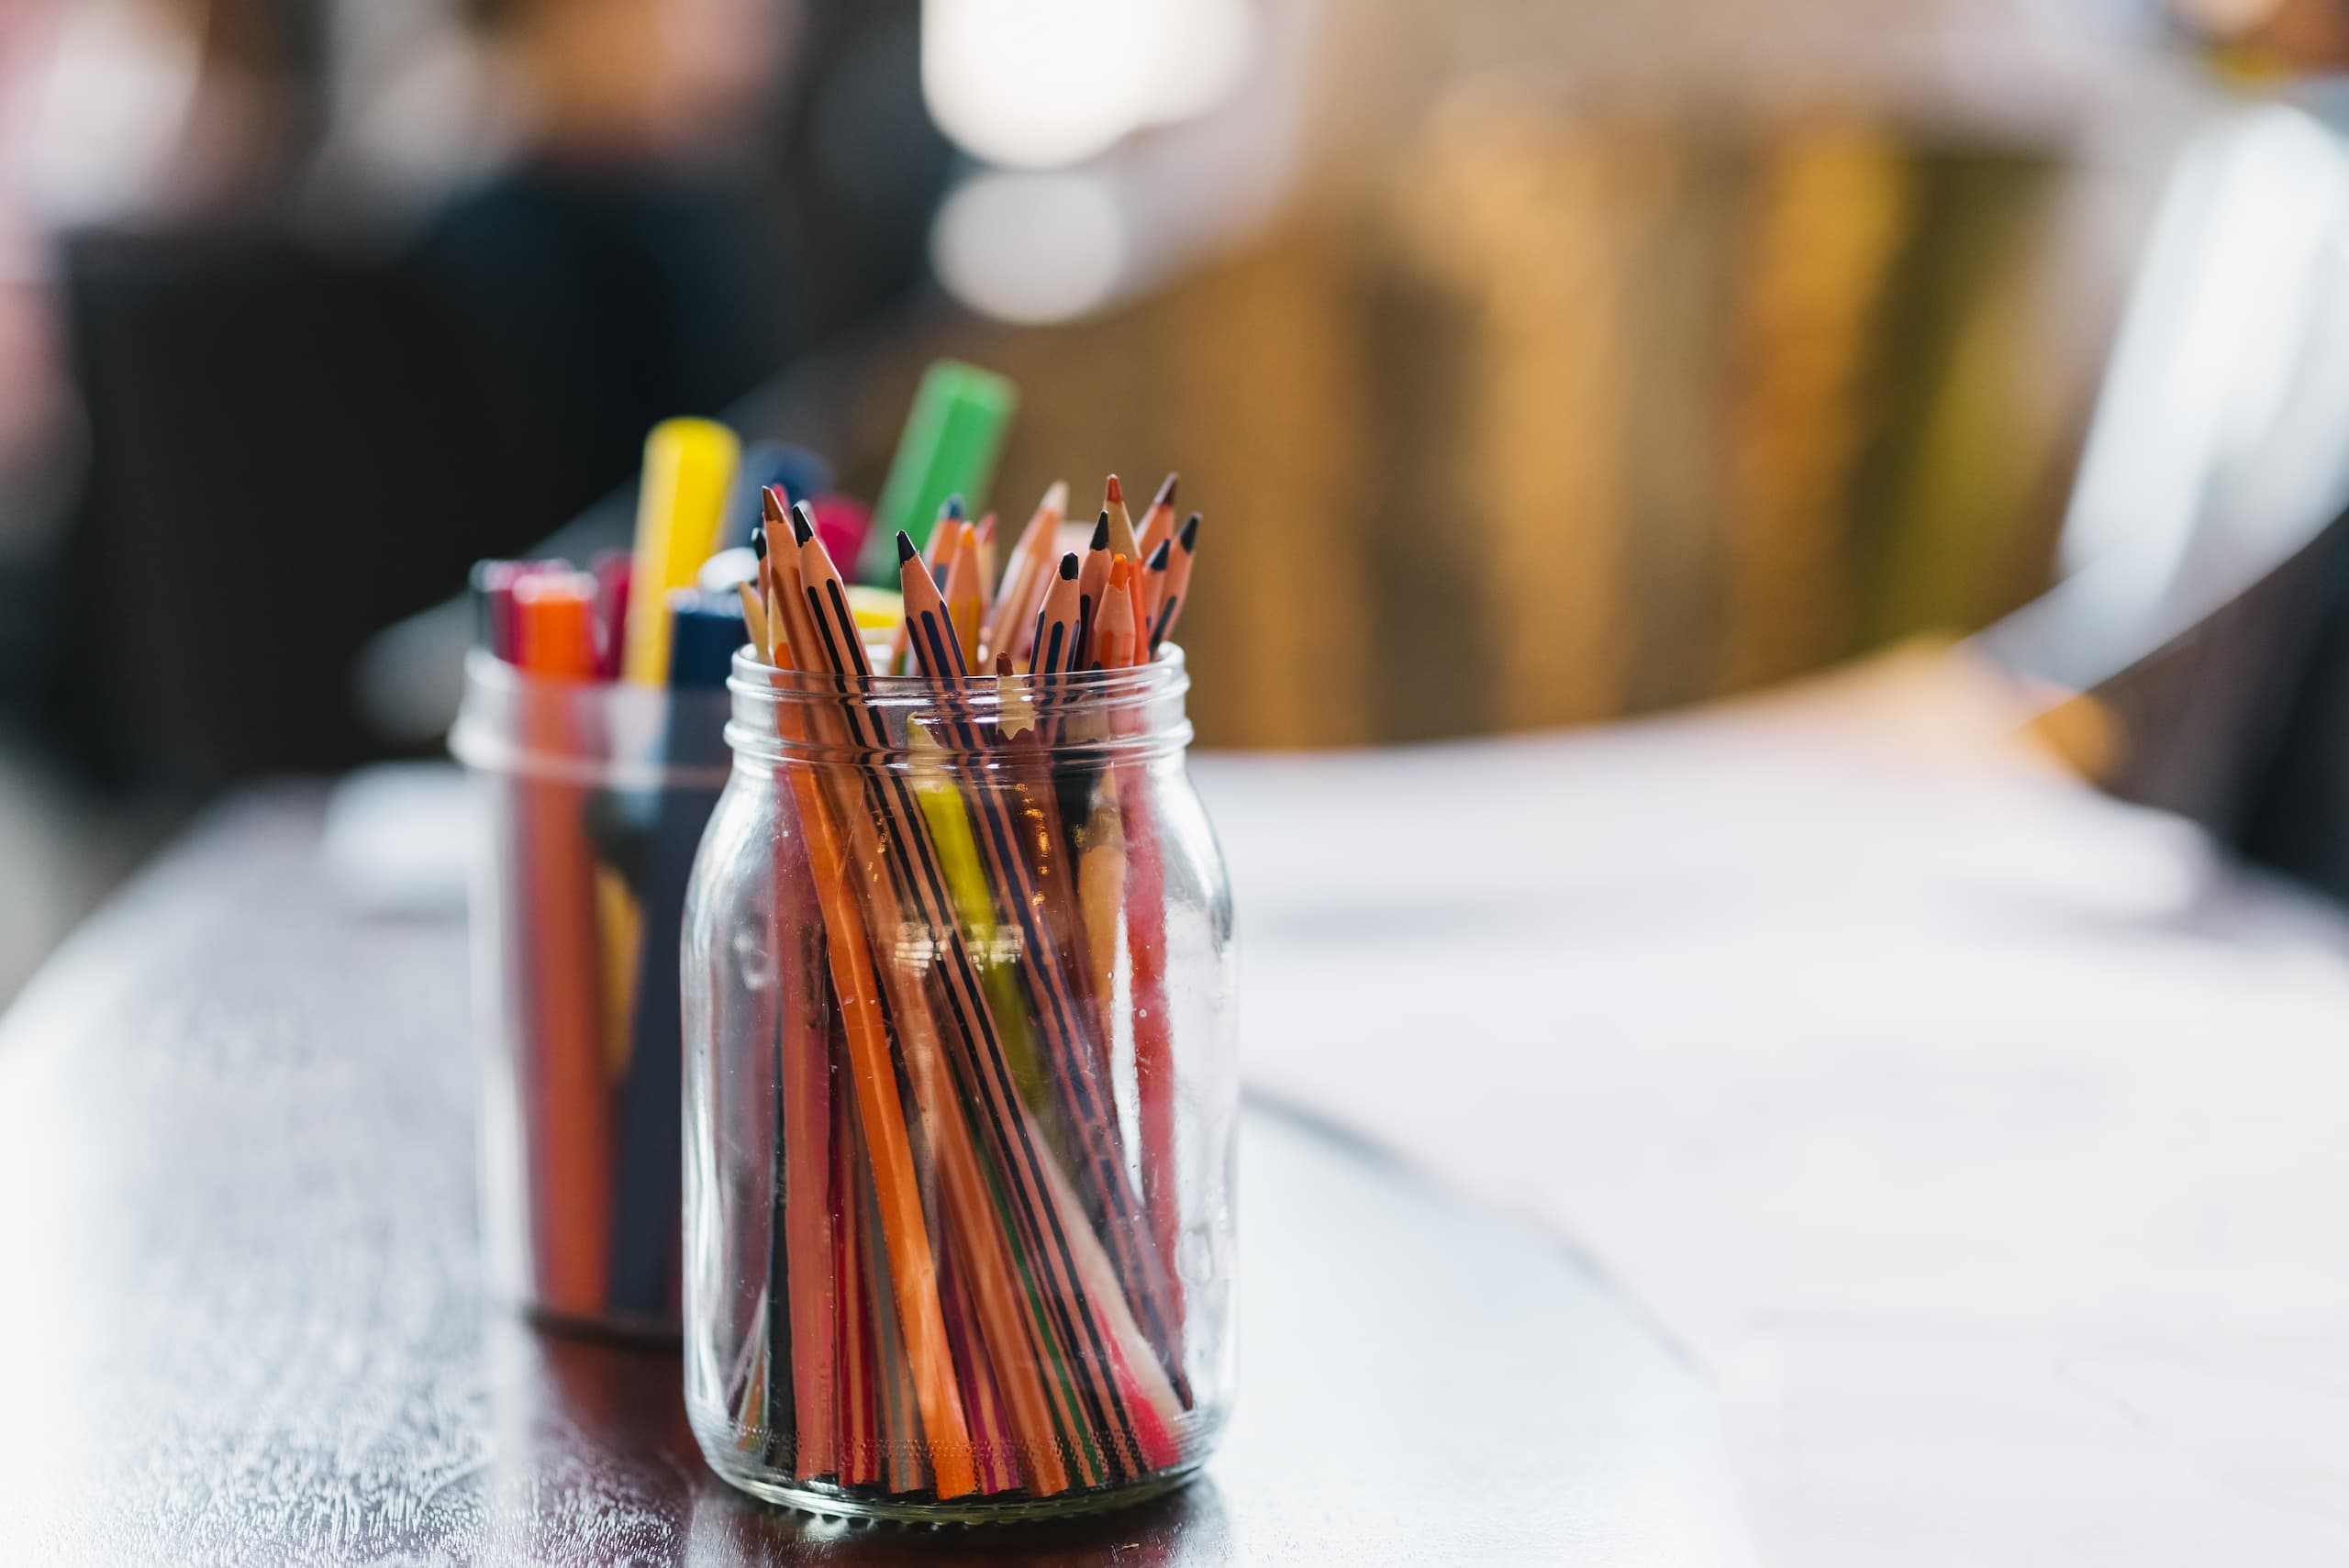 Mason jars full of pencils on a table